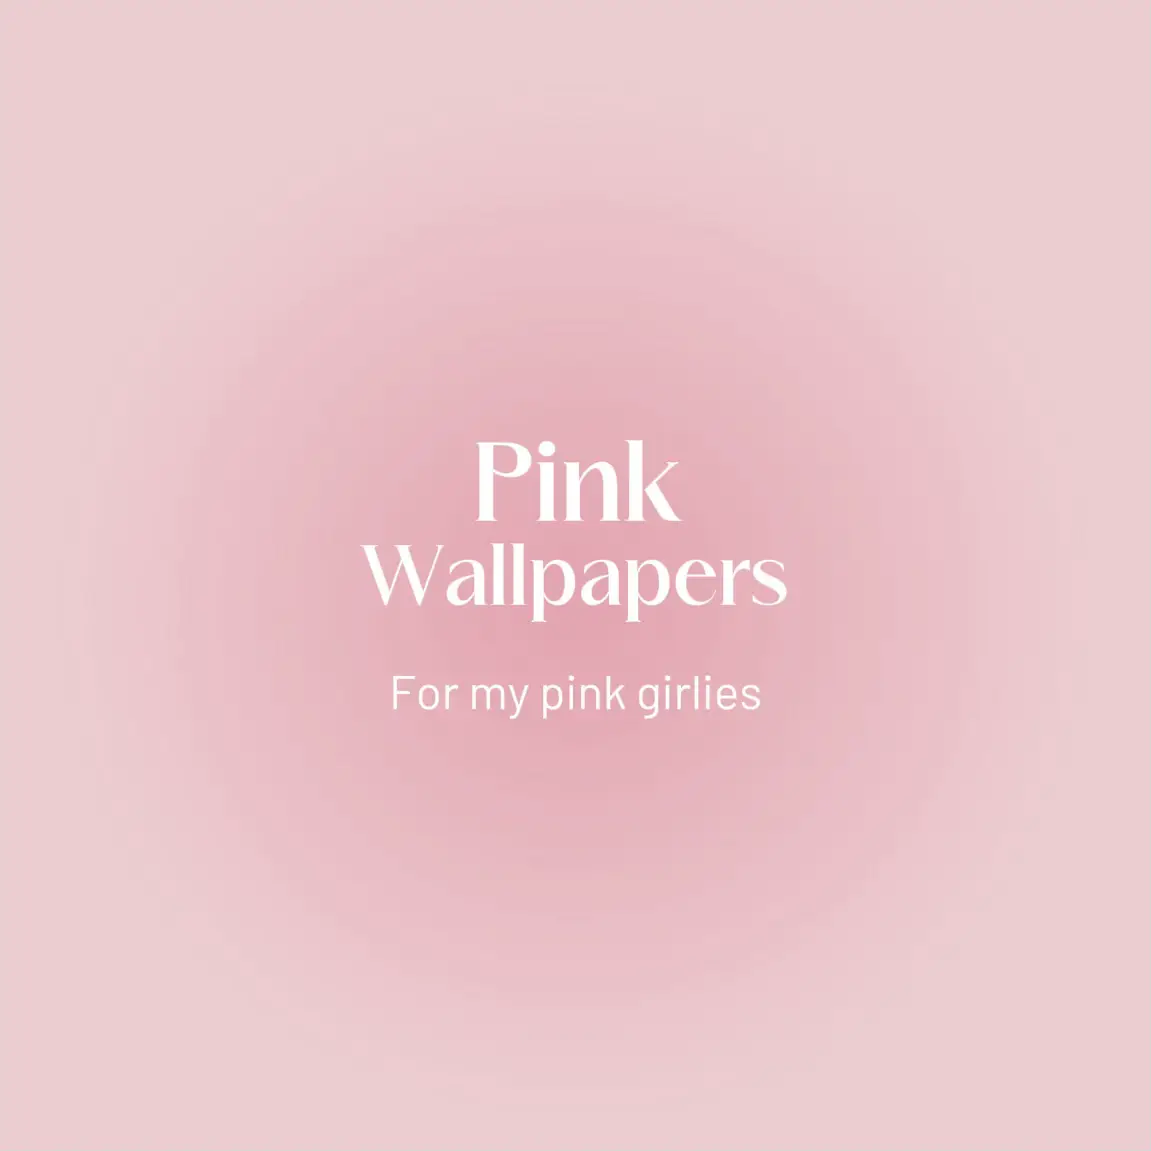 cute wallpapers aesthetic pink - Lemon8 Search